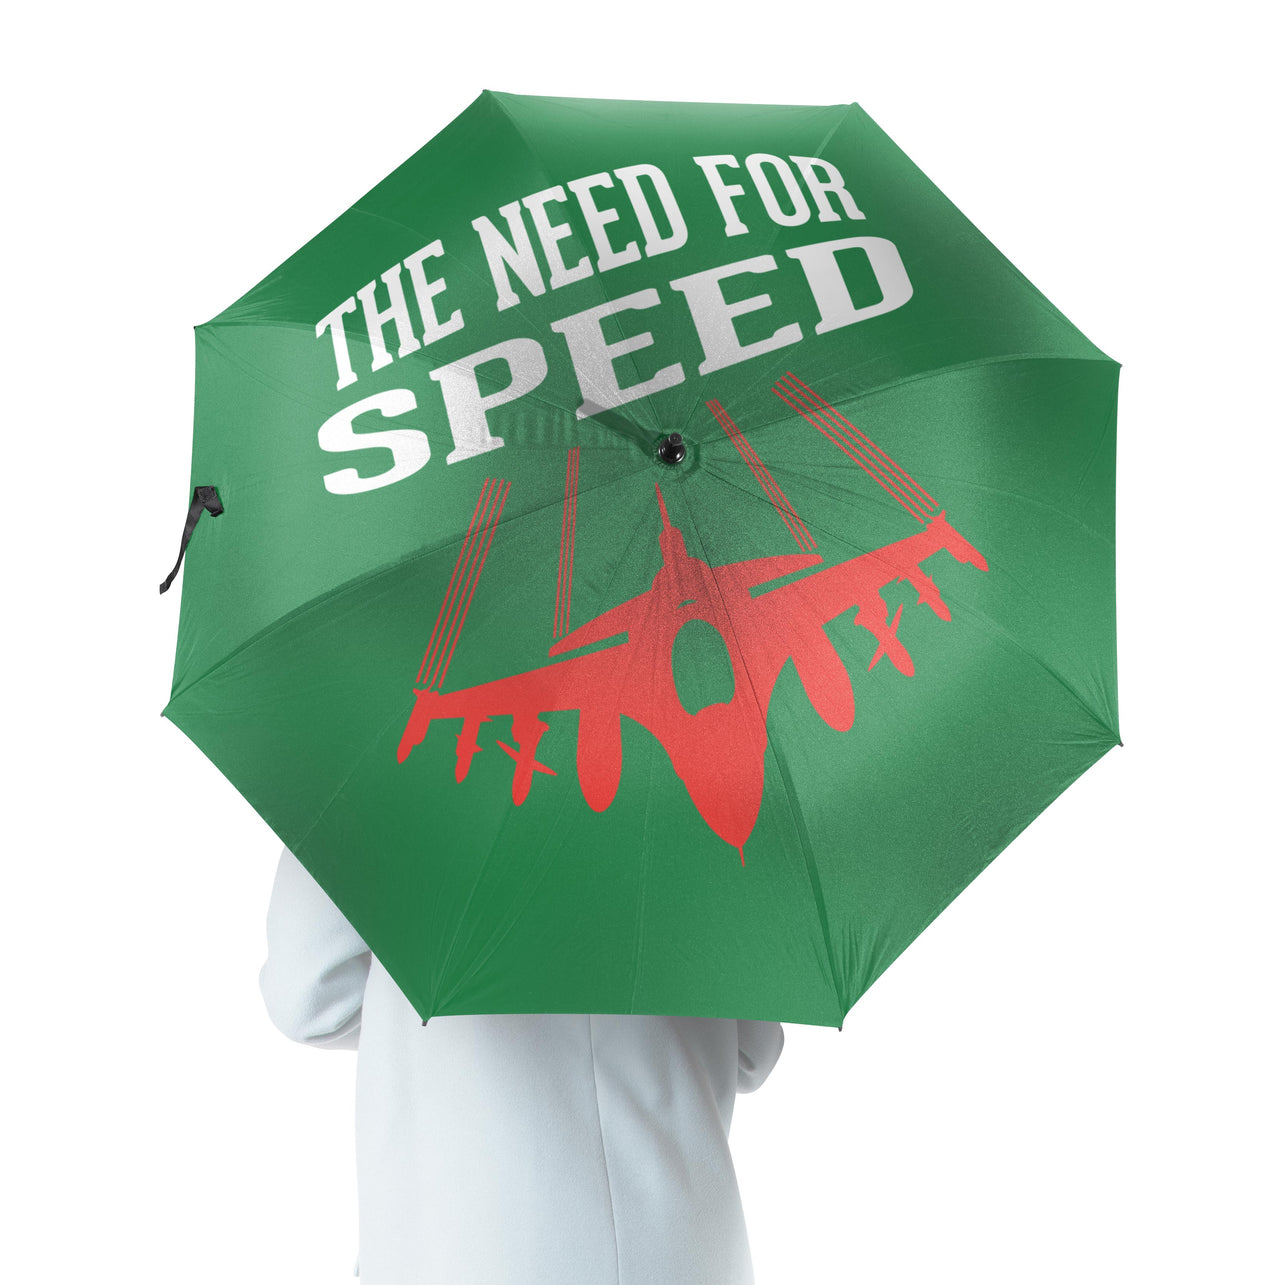 The Need For Speed Designed Umbrella